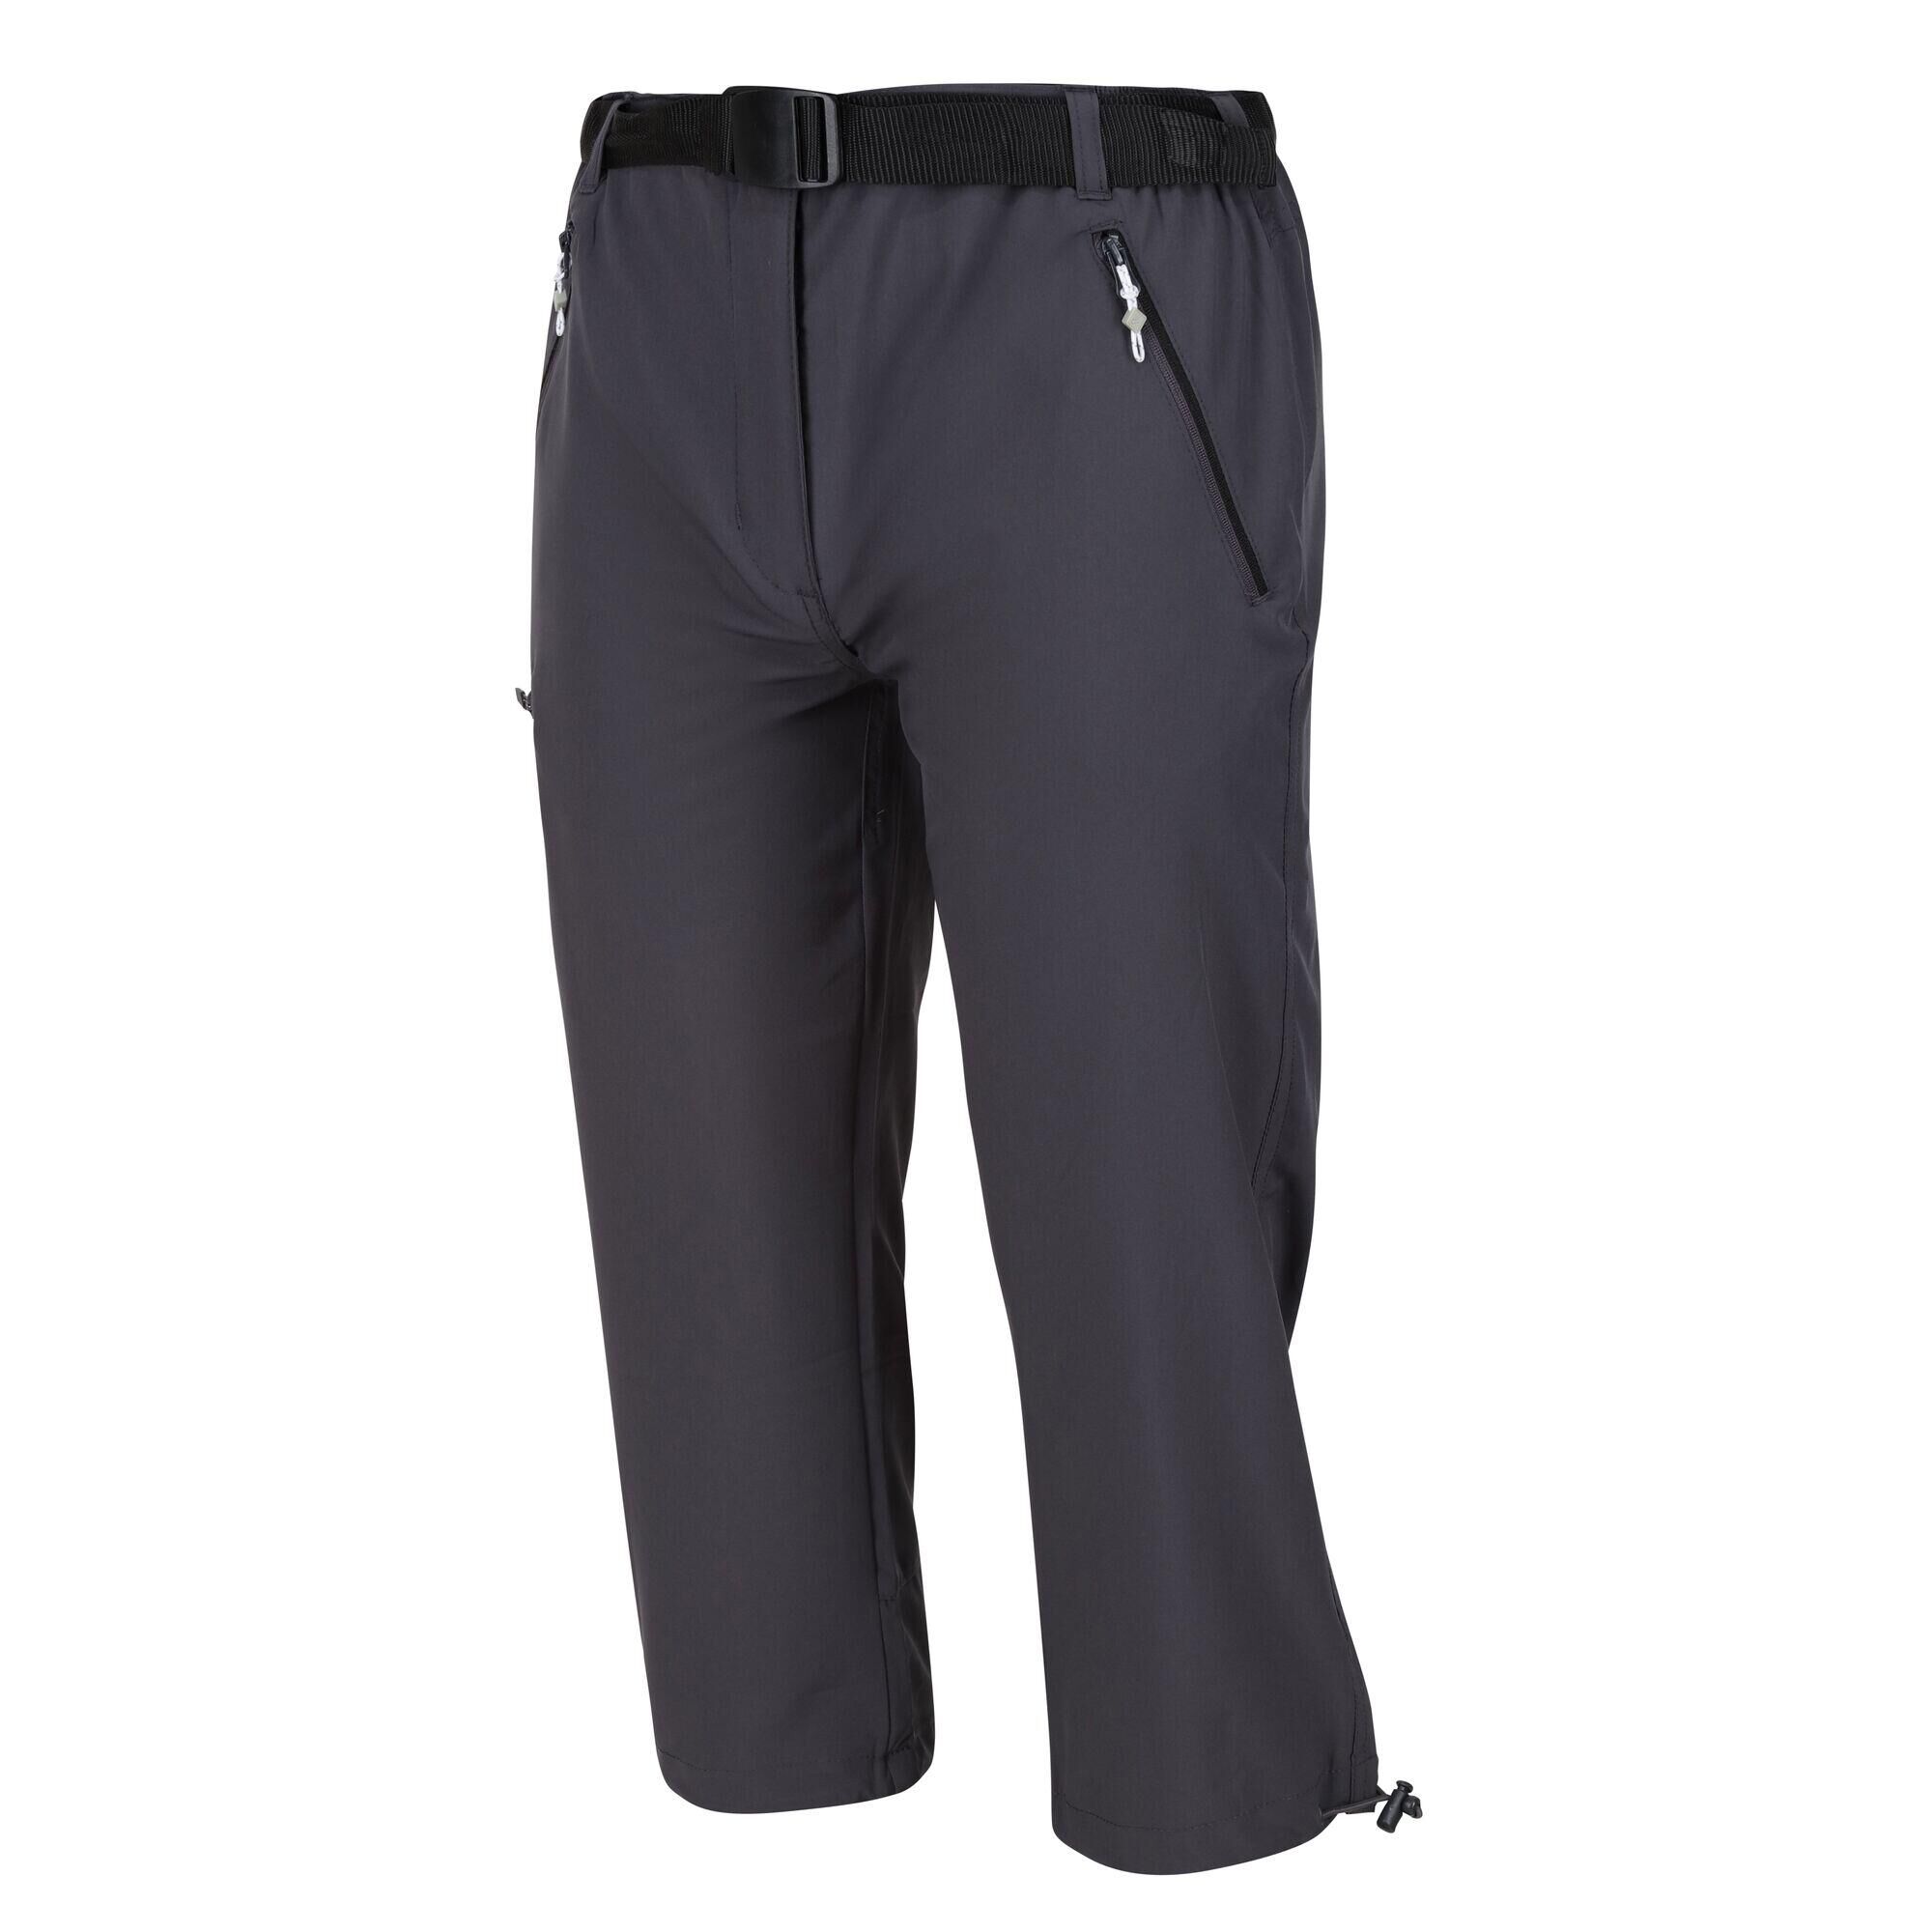 REGATTA Xert Women's Hiking Trousers - Mid Grey